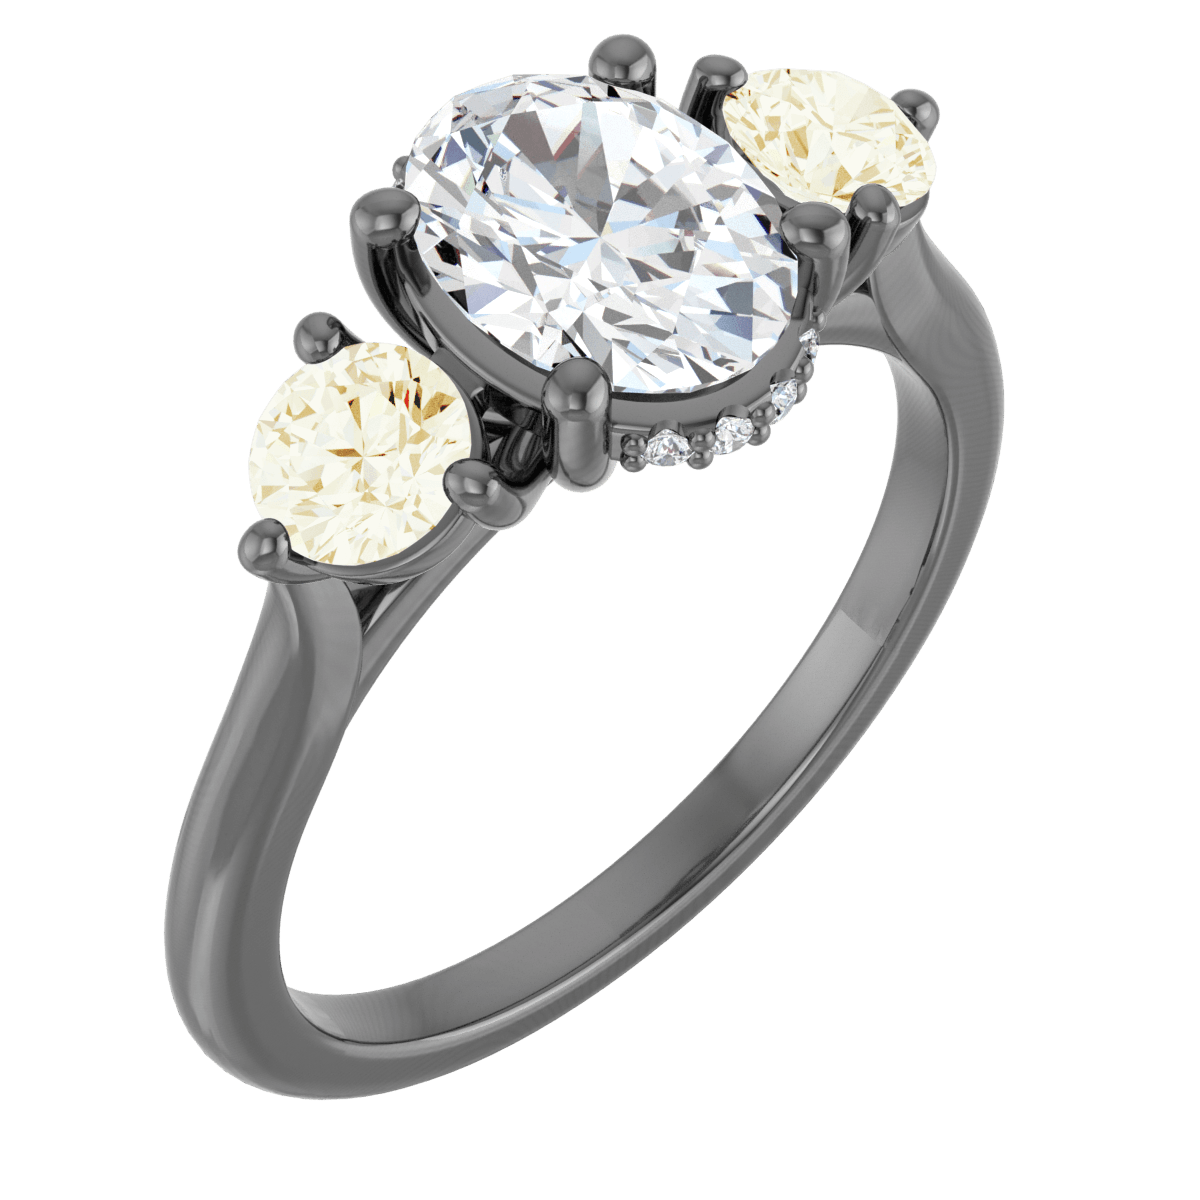 three stone engagement ring